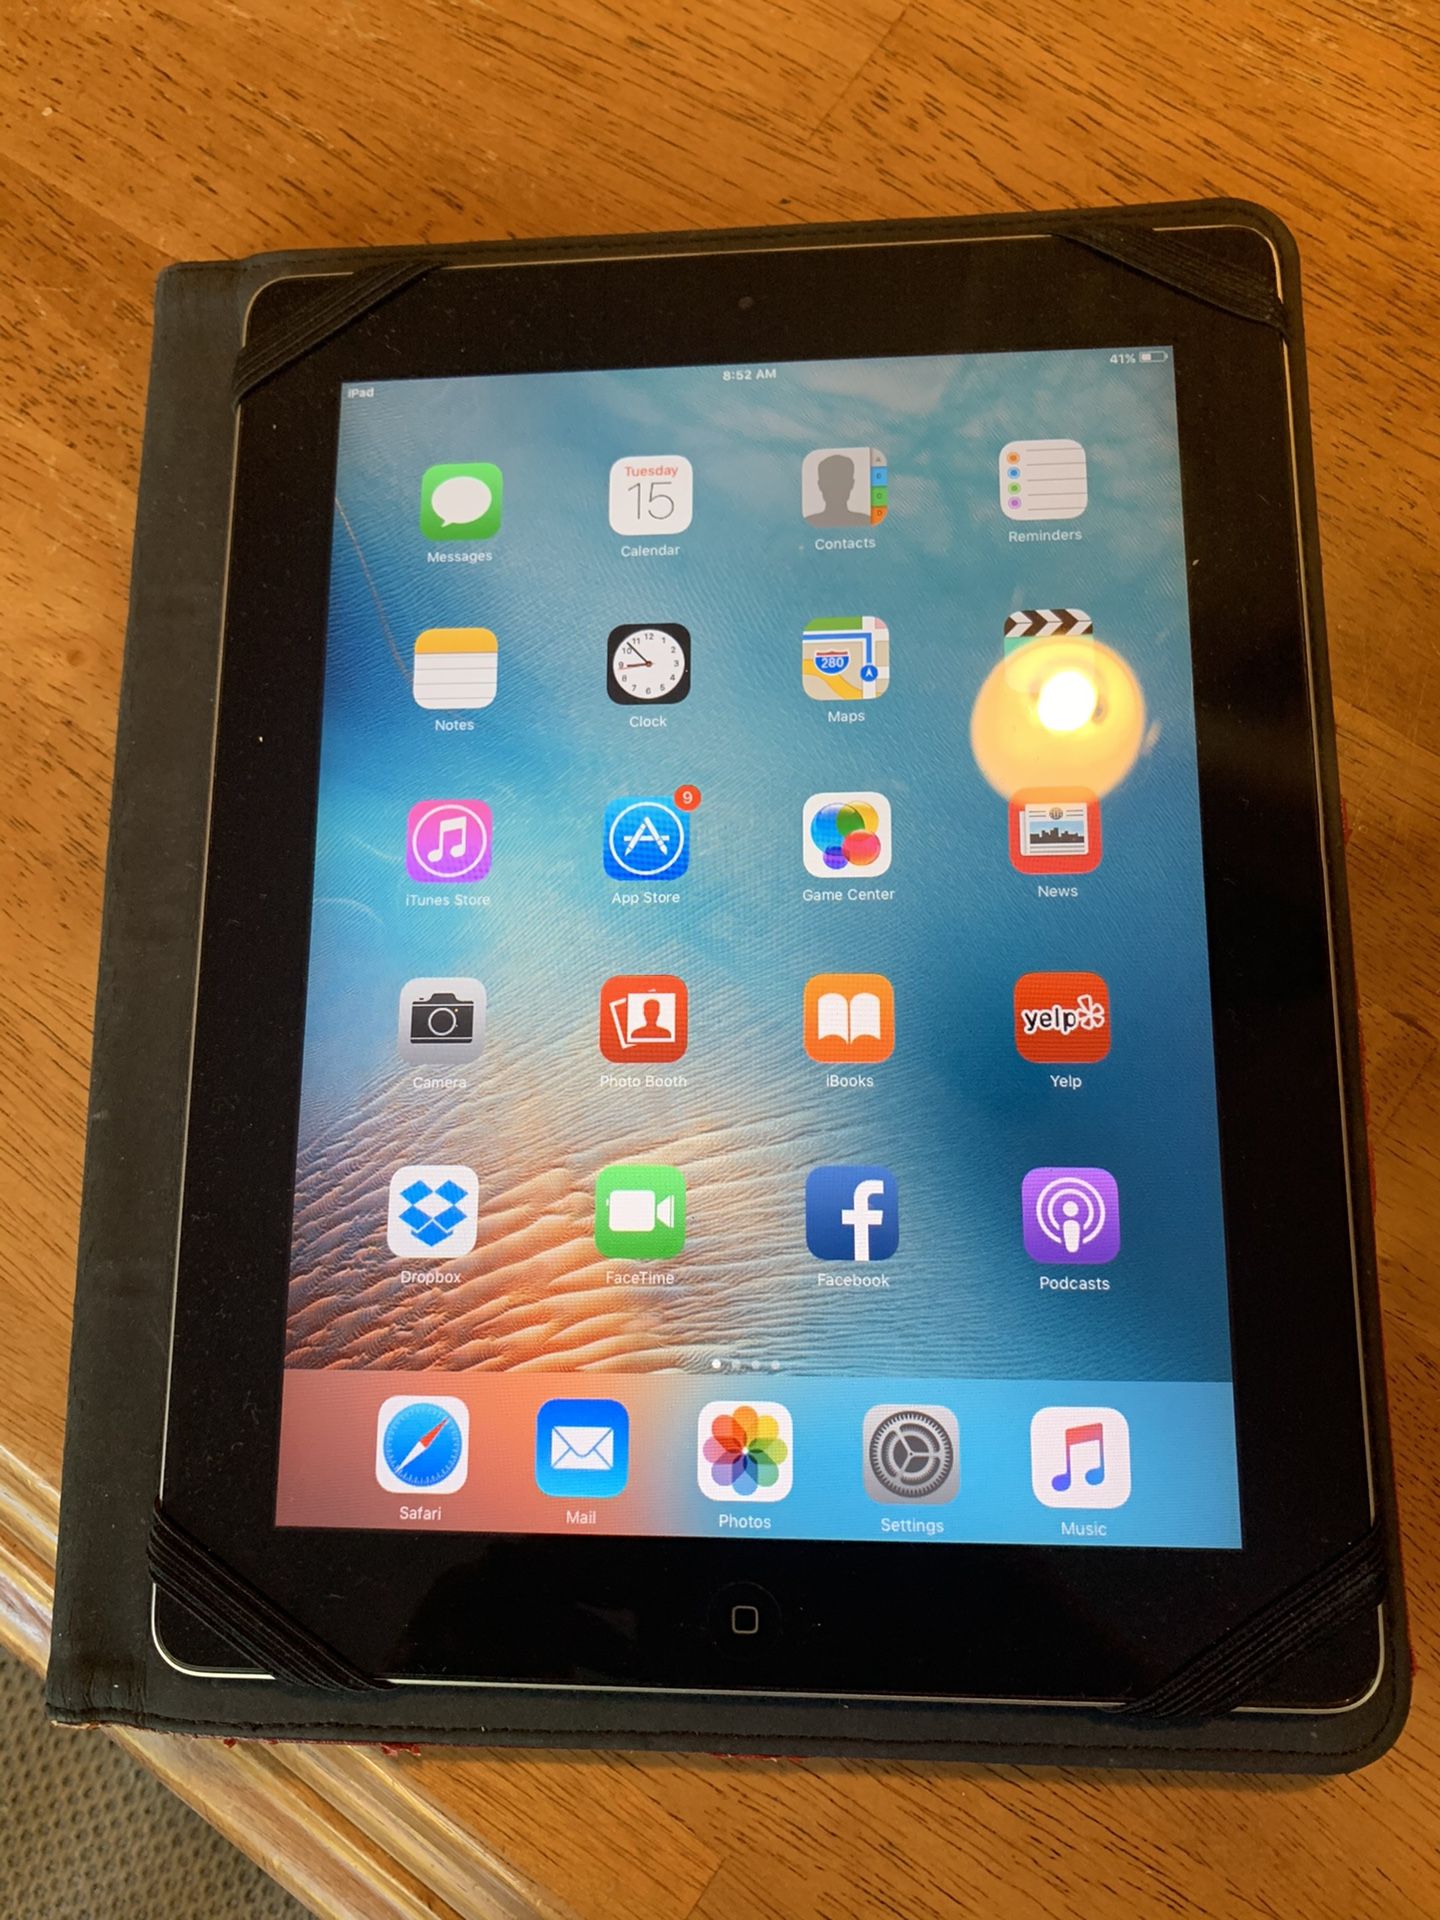 Apple iPad 2 16GB MC769LL/A A1395 WiFi Only TESTED